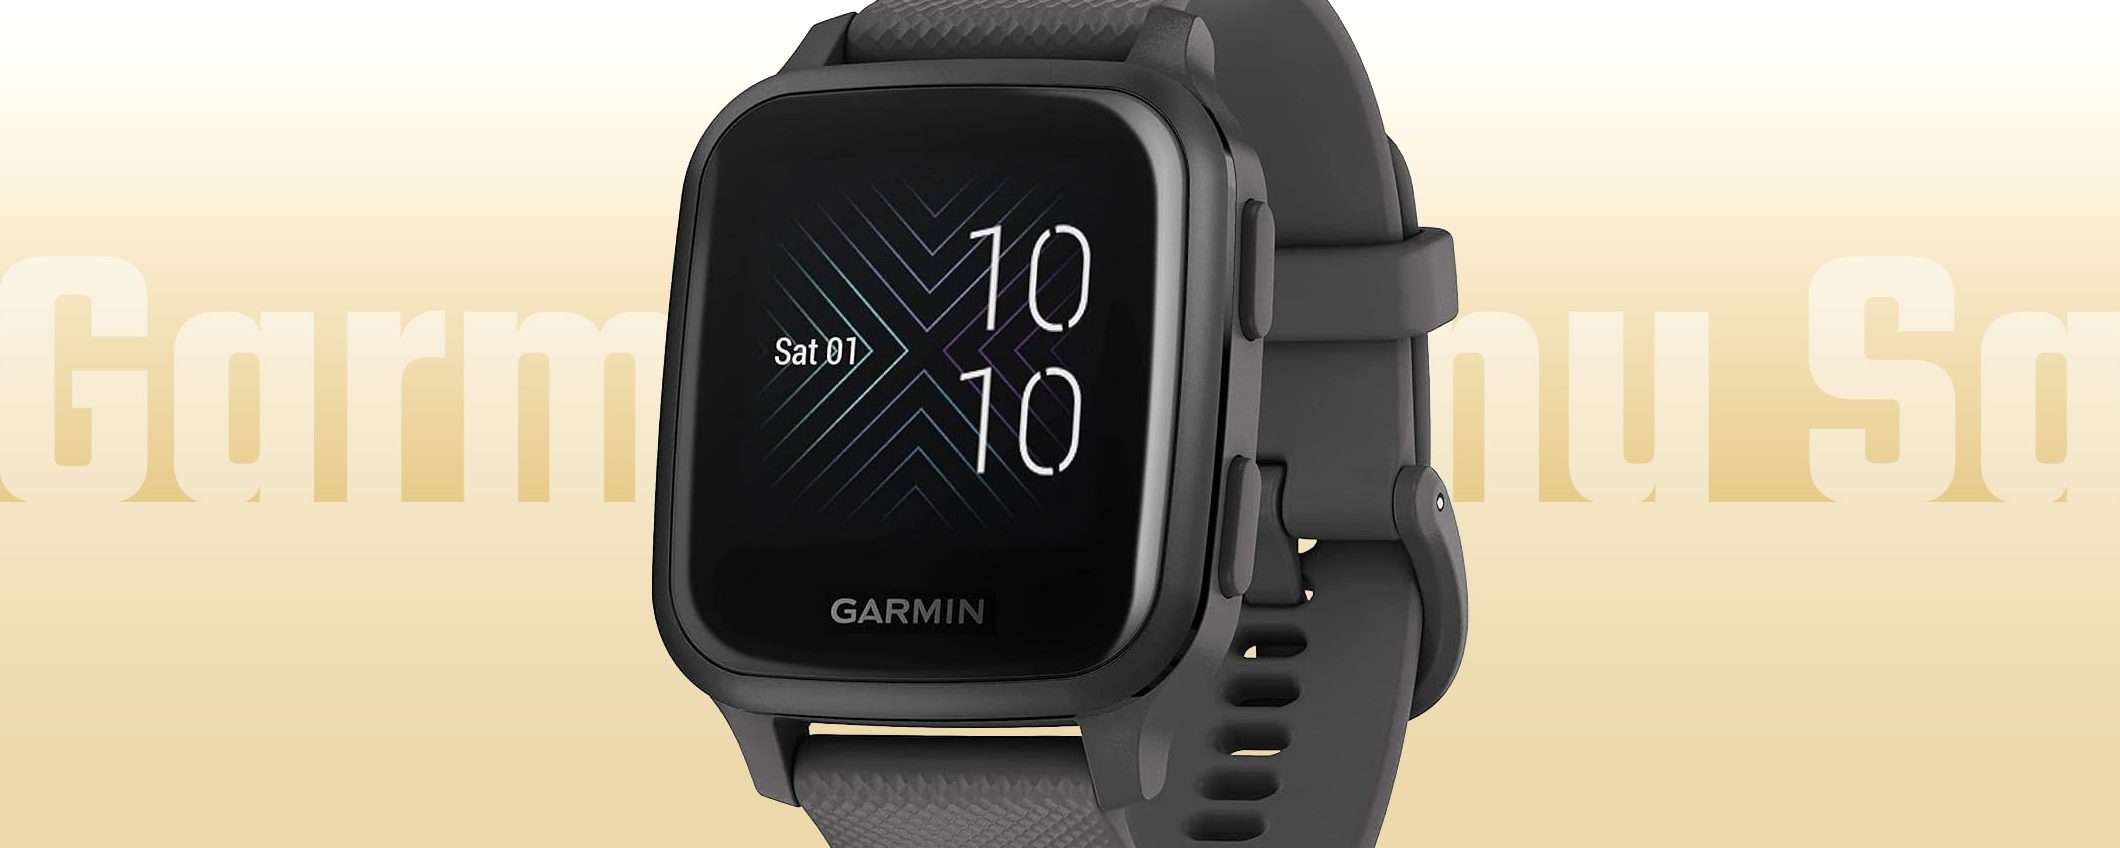 Metti al polso lo smartwatch Garmin con GPS (SCONTO 30%)